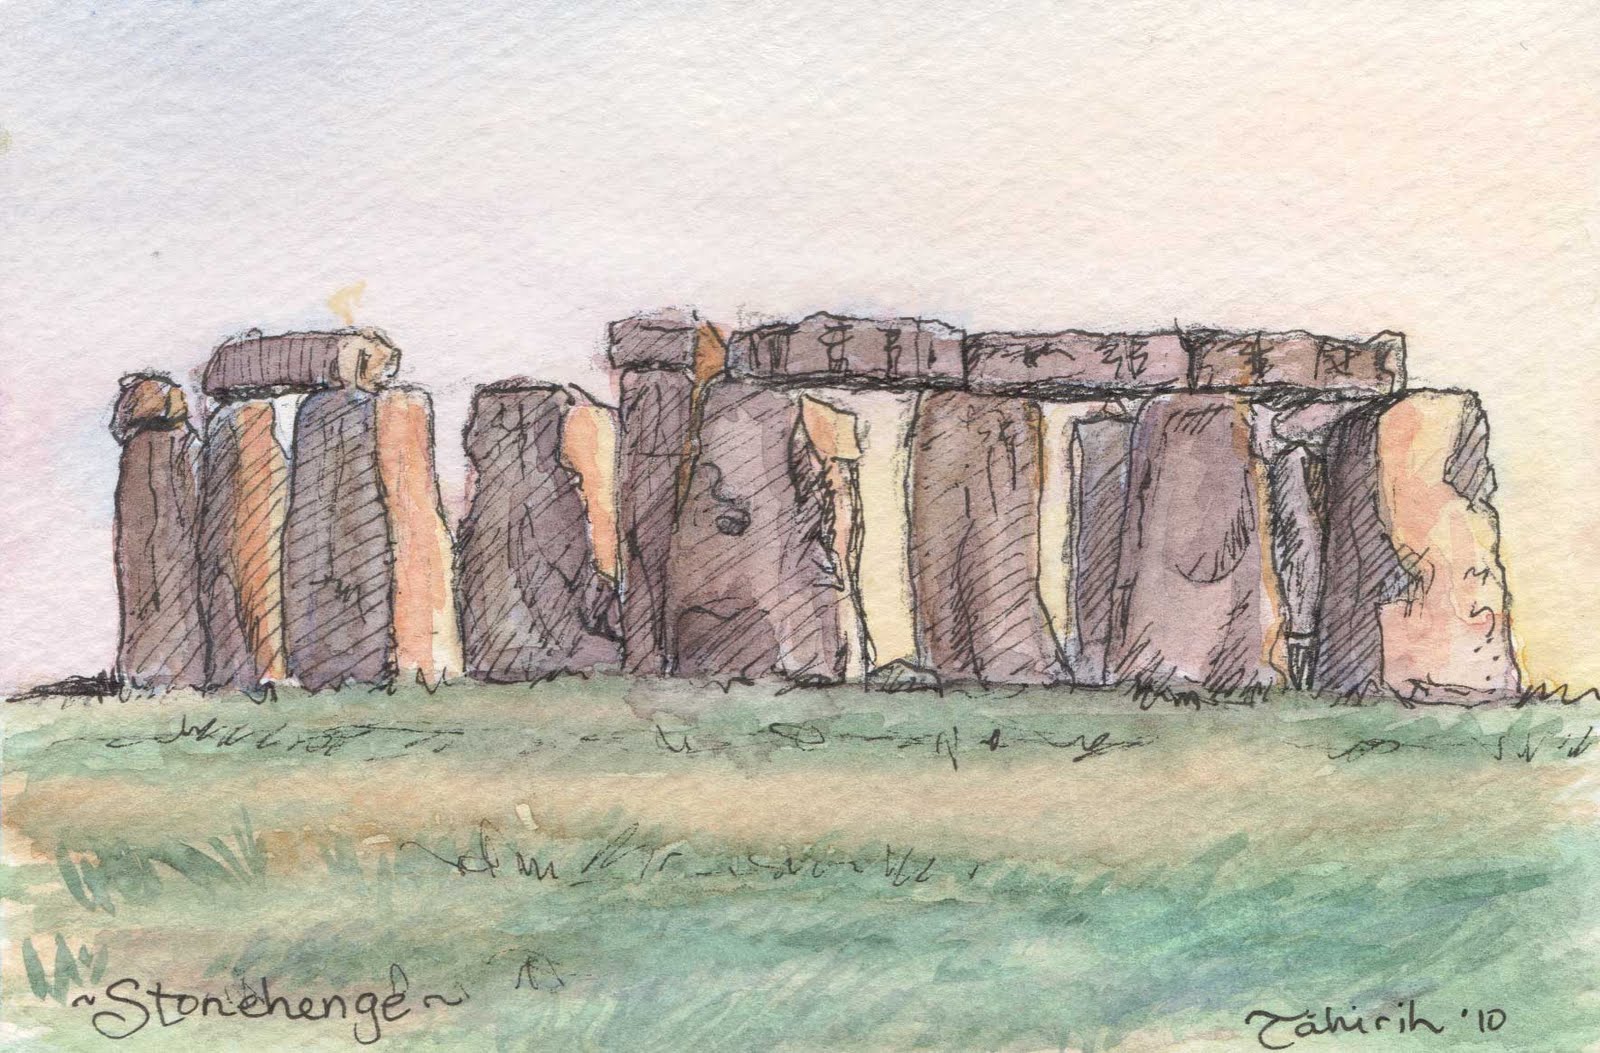 dhruba mazumder - fineart, illustrations, design, prints: Stonehenge  Paper Test with Watercolor